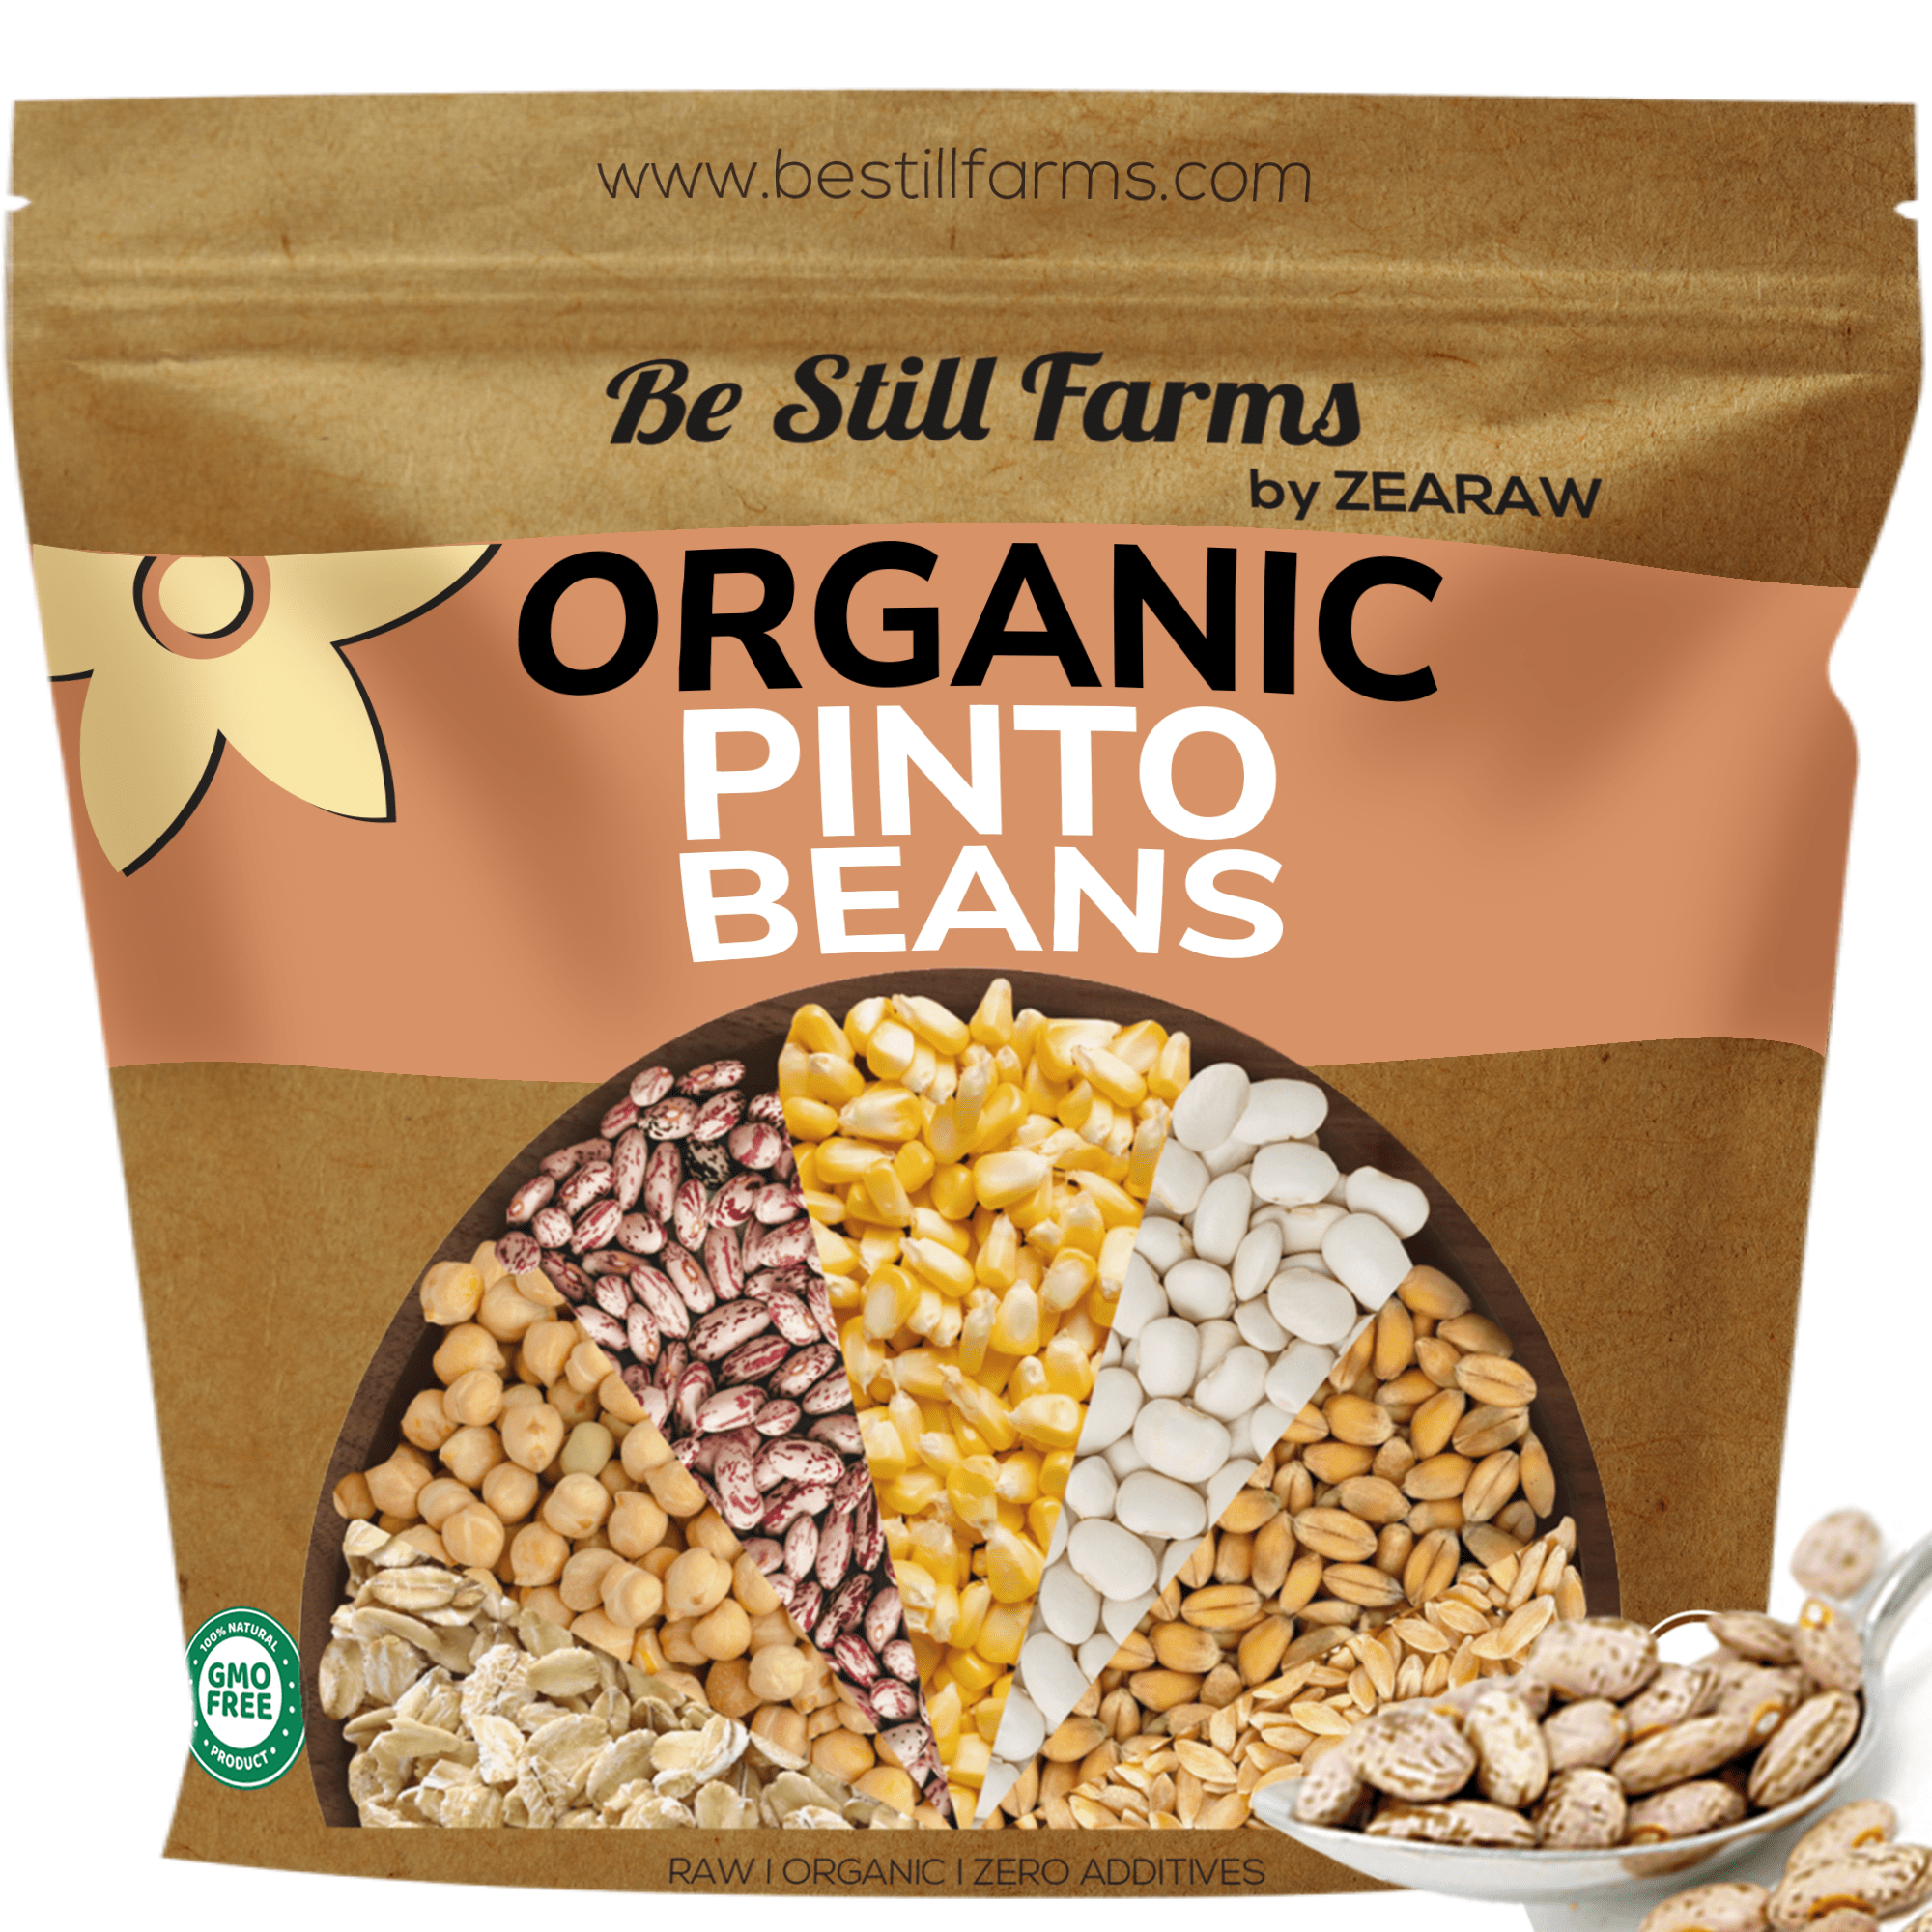 Organic pinto beans